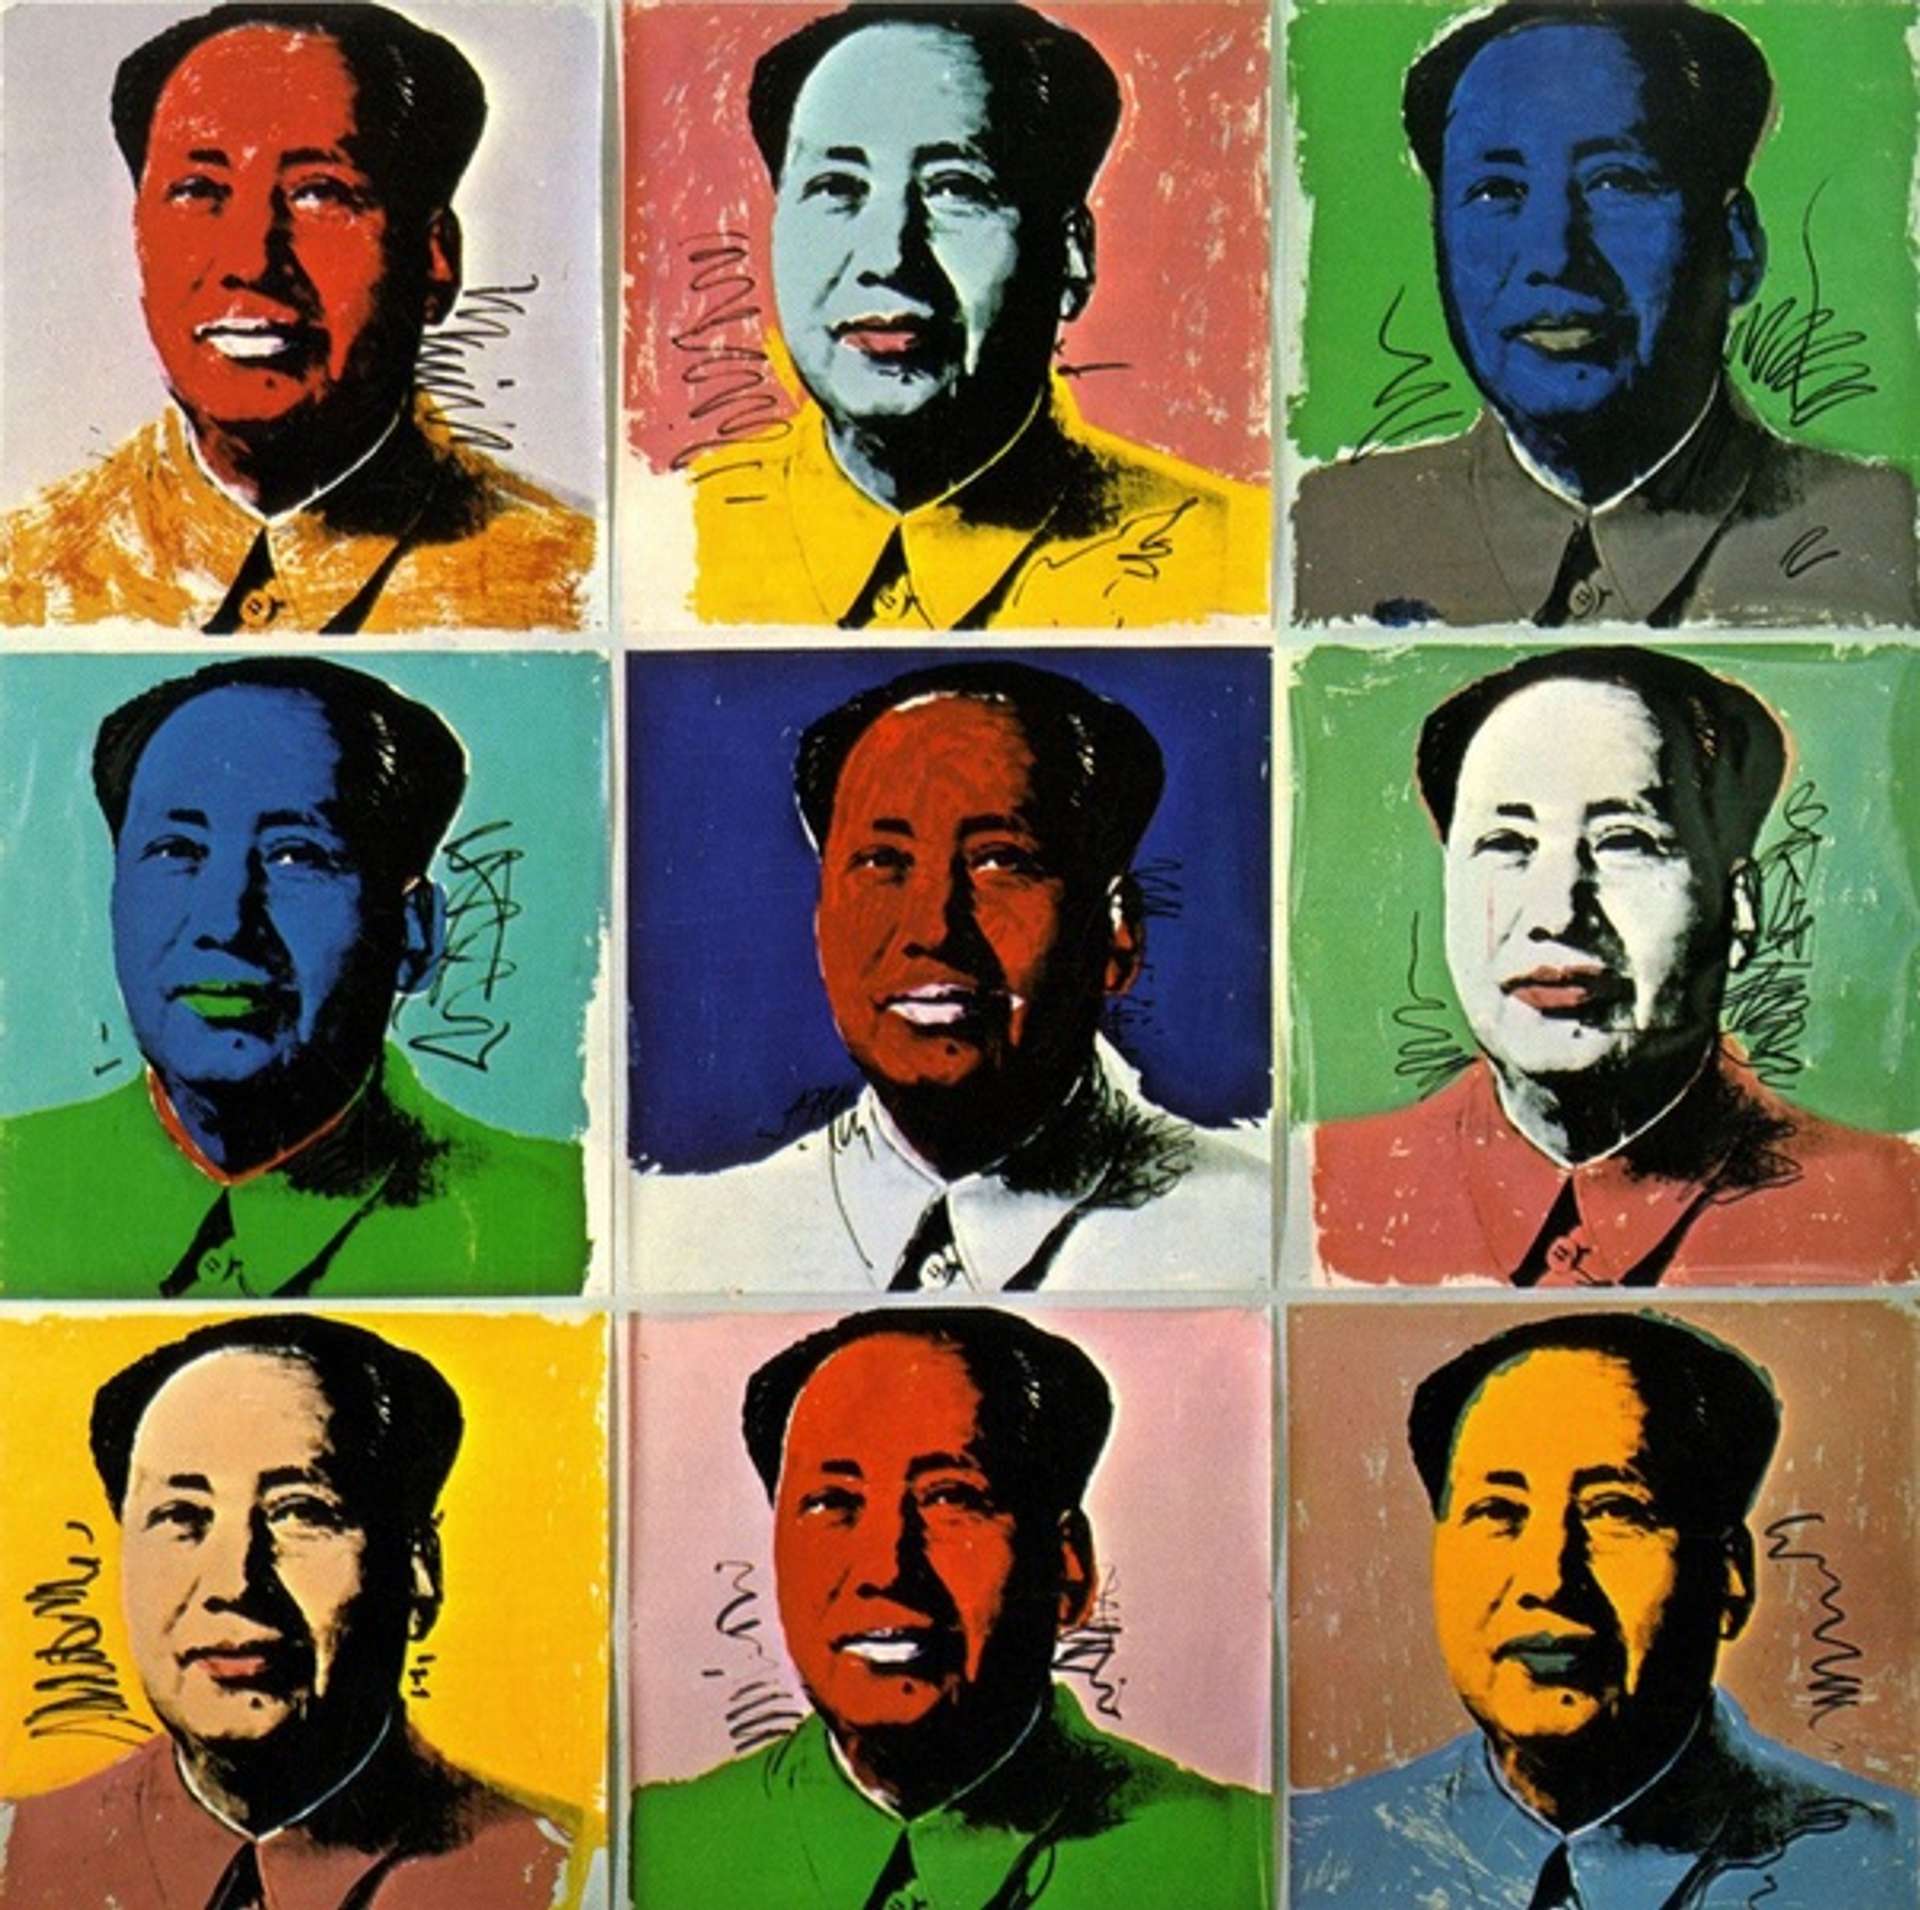 Mao by Andy Warhol Background & Meaning | MyArtBroker